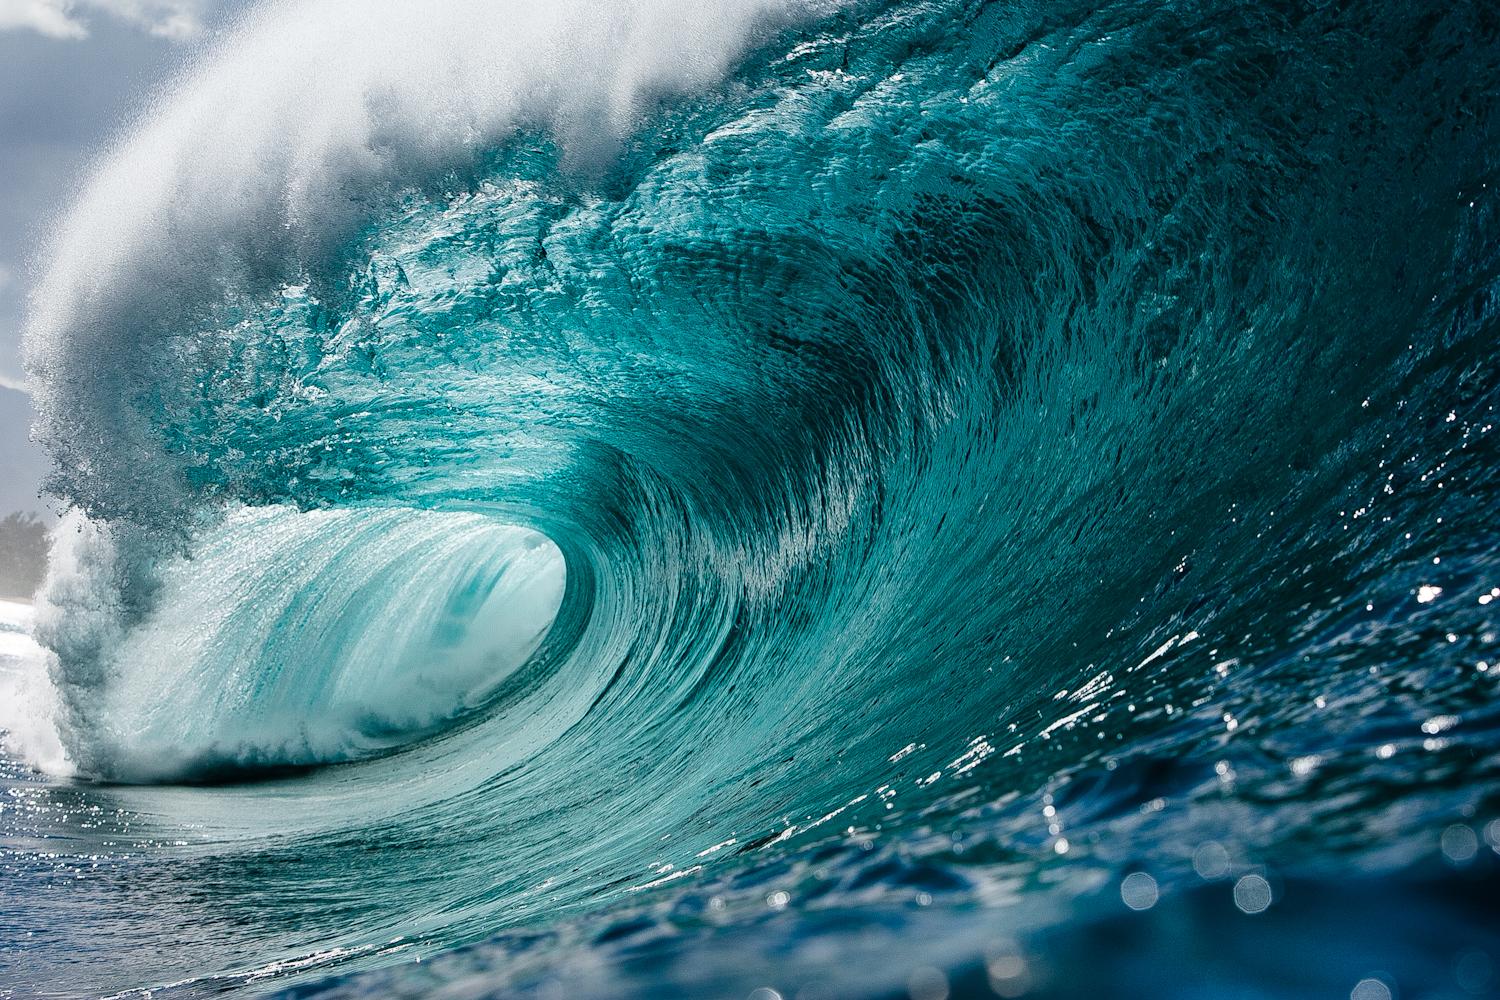 Mike Coots Color Photograph – Waves mit Wellen